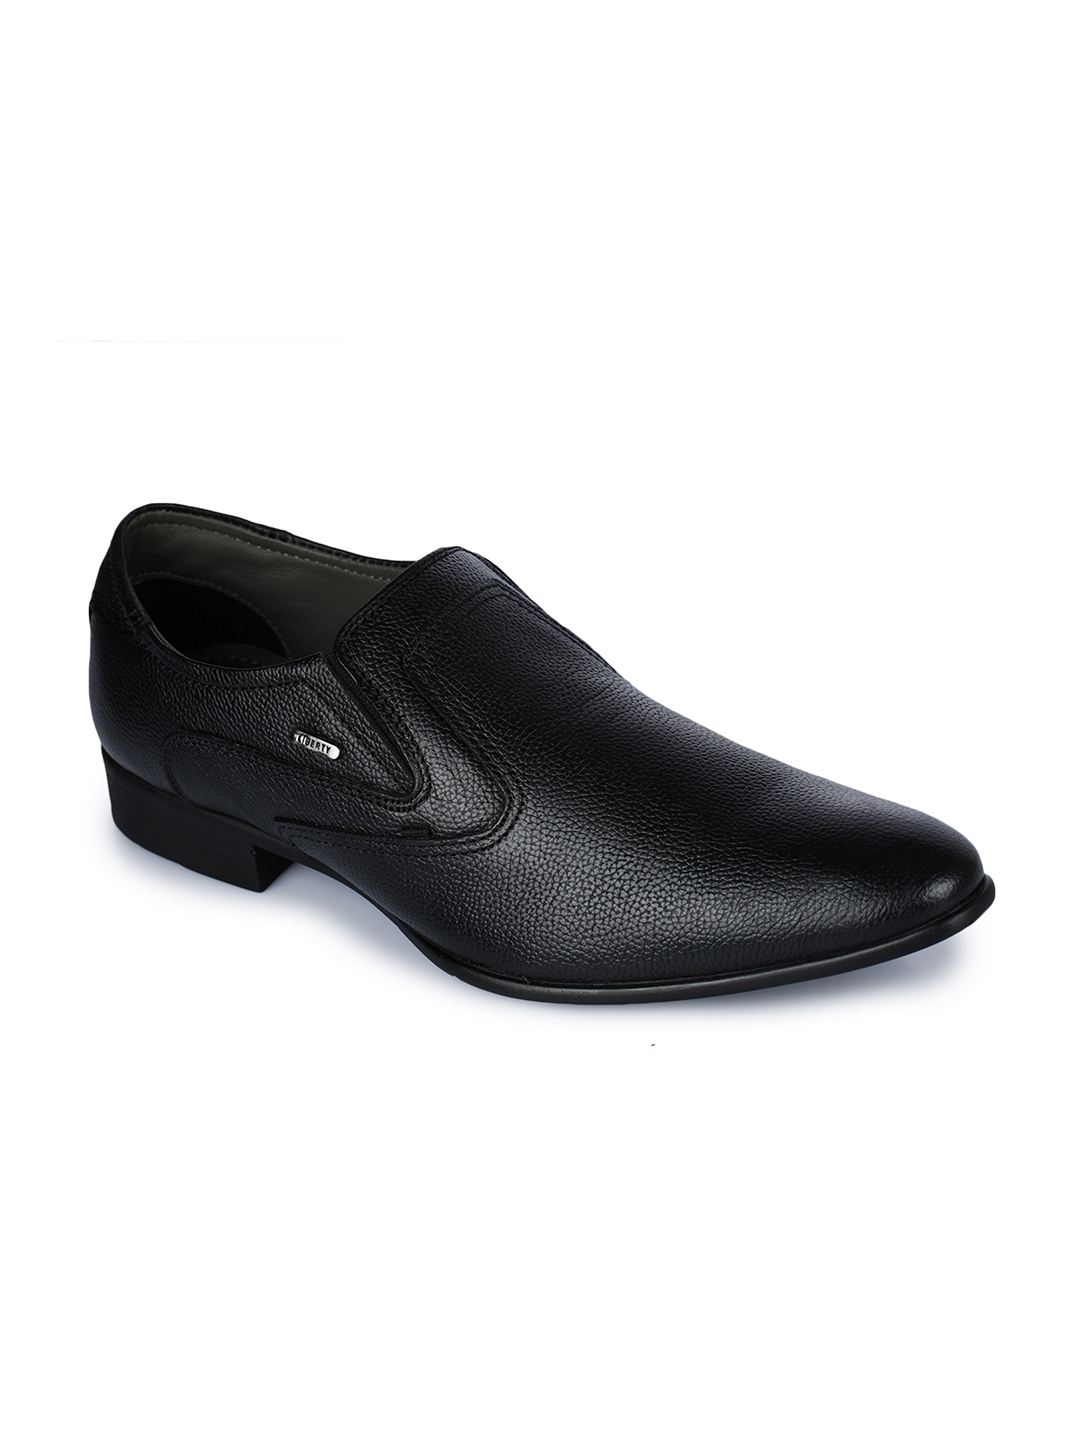 Buy Liberty Men Black Solid Leather Formal Slip On Shoes Formal Shoes For Men 12009888 Myntra 1726